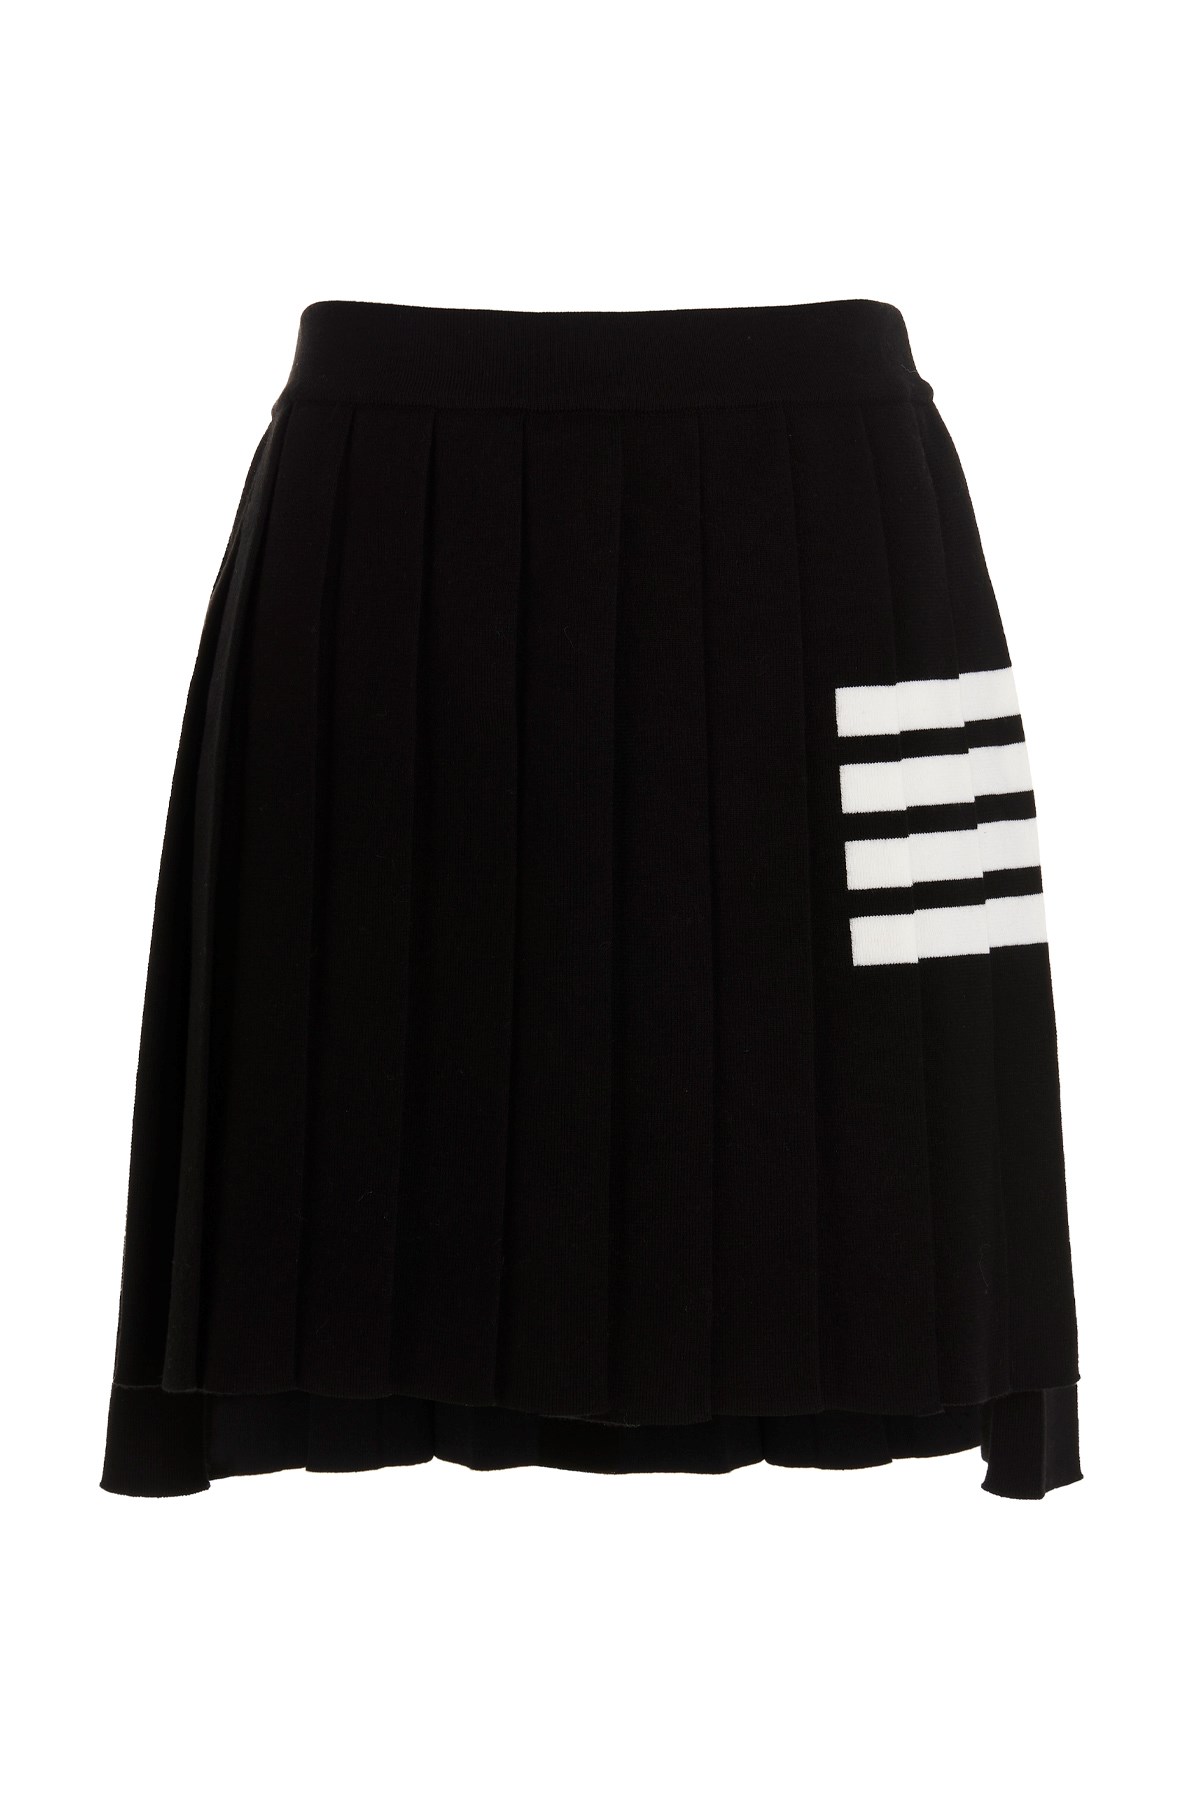 THOM BROWNE Pleated Skirt